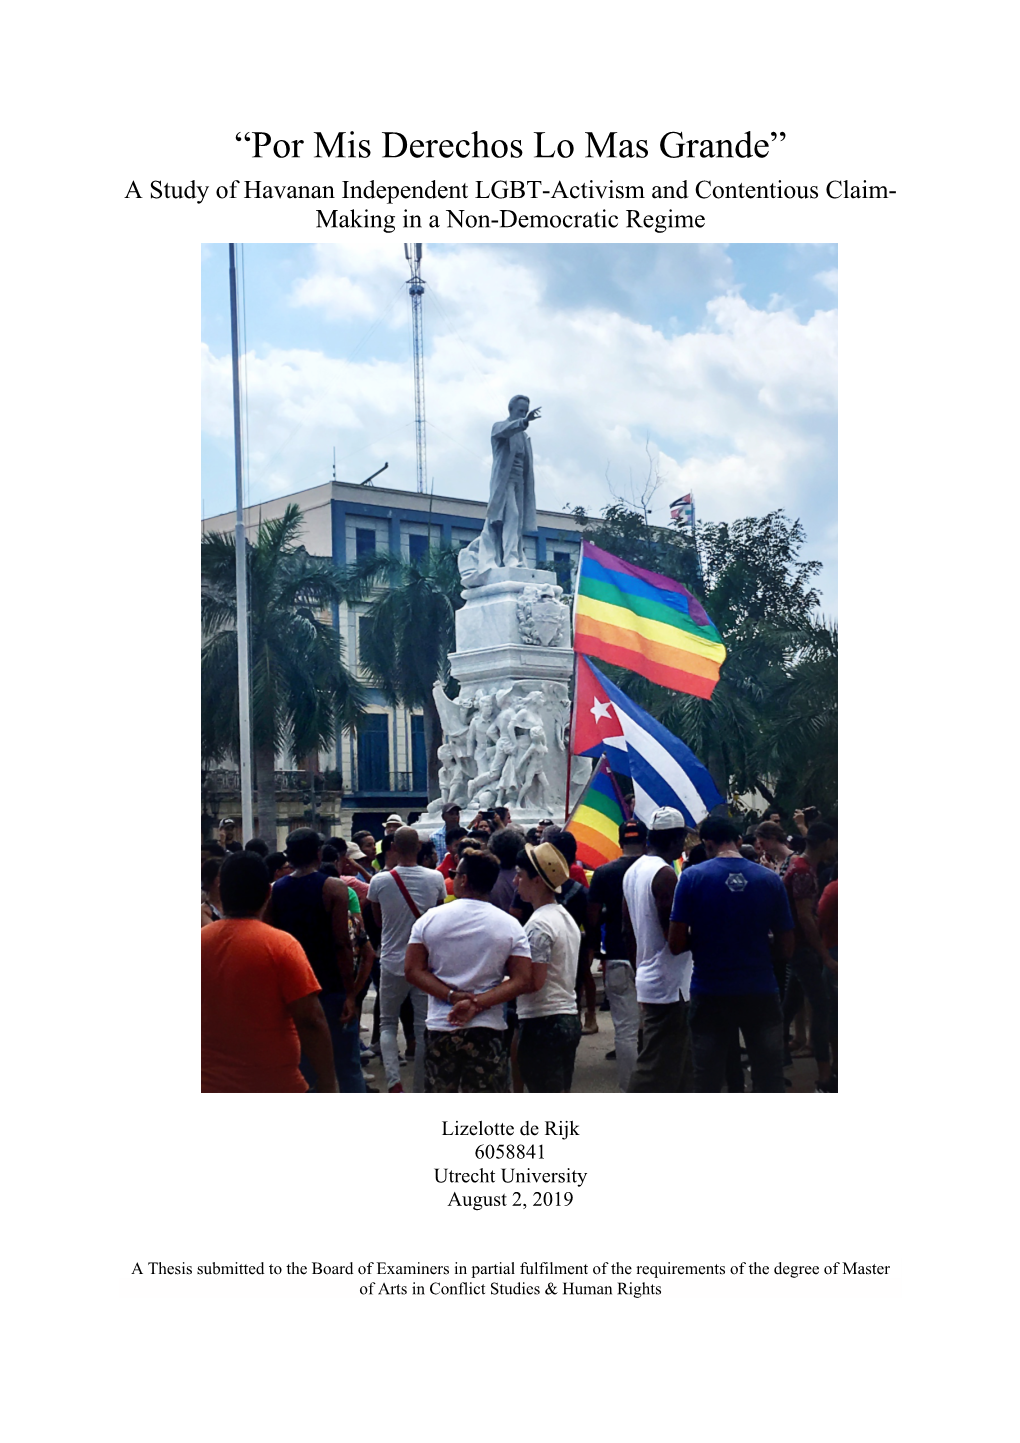 “Por Mis Derechos Lo Mas Grande” a Study of Havanan Independent LGBT-Activism and Contentious Claim- Making in a Non-Democratic Regime